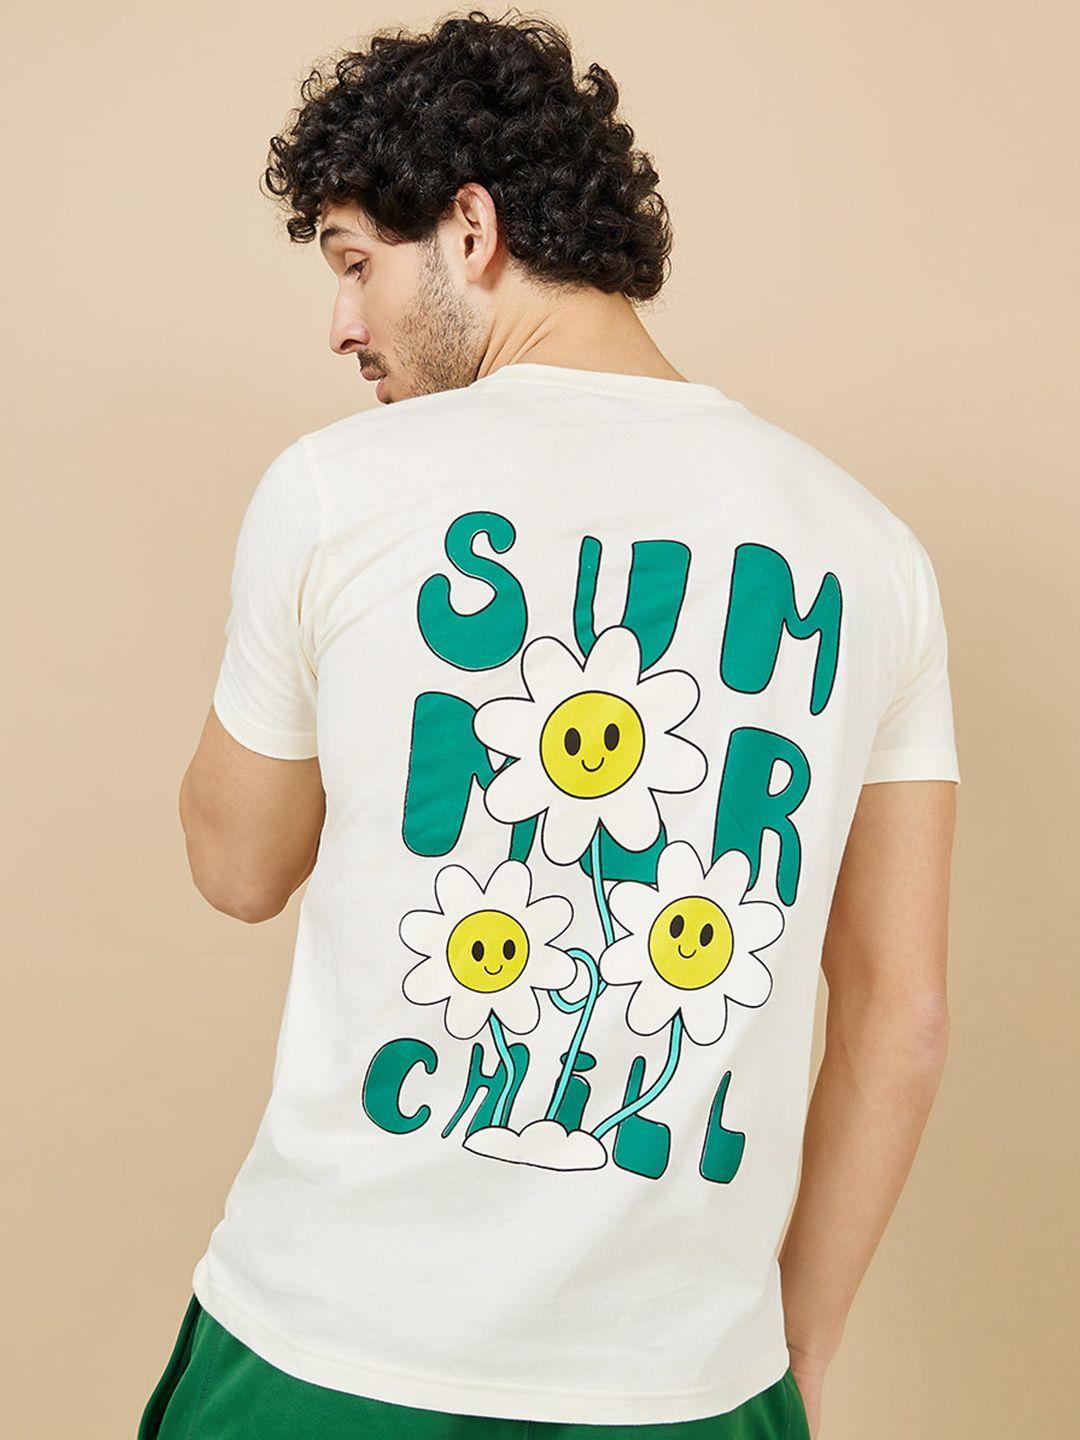 styli typography printed cotton t-shirt